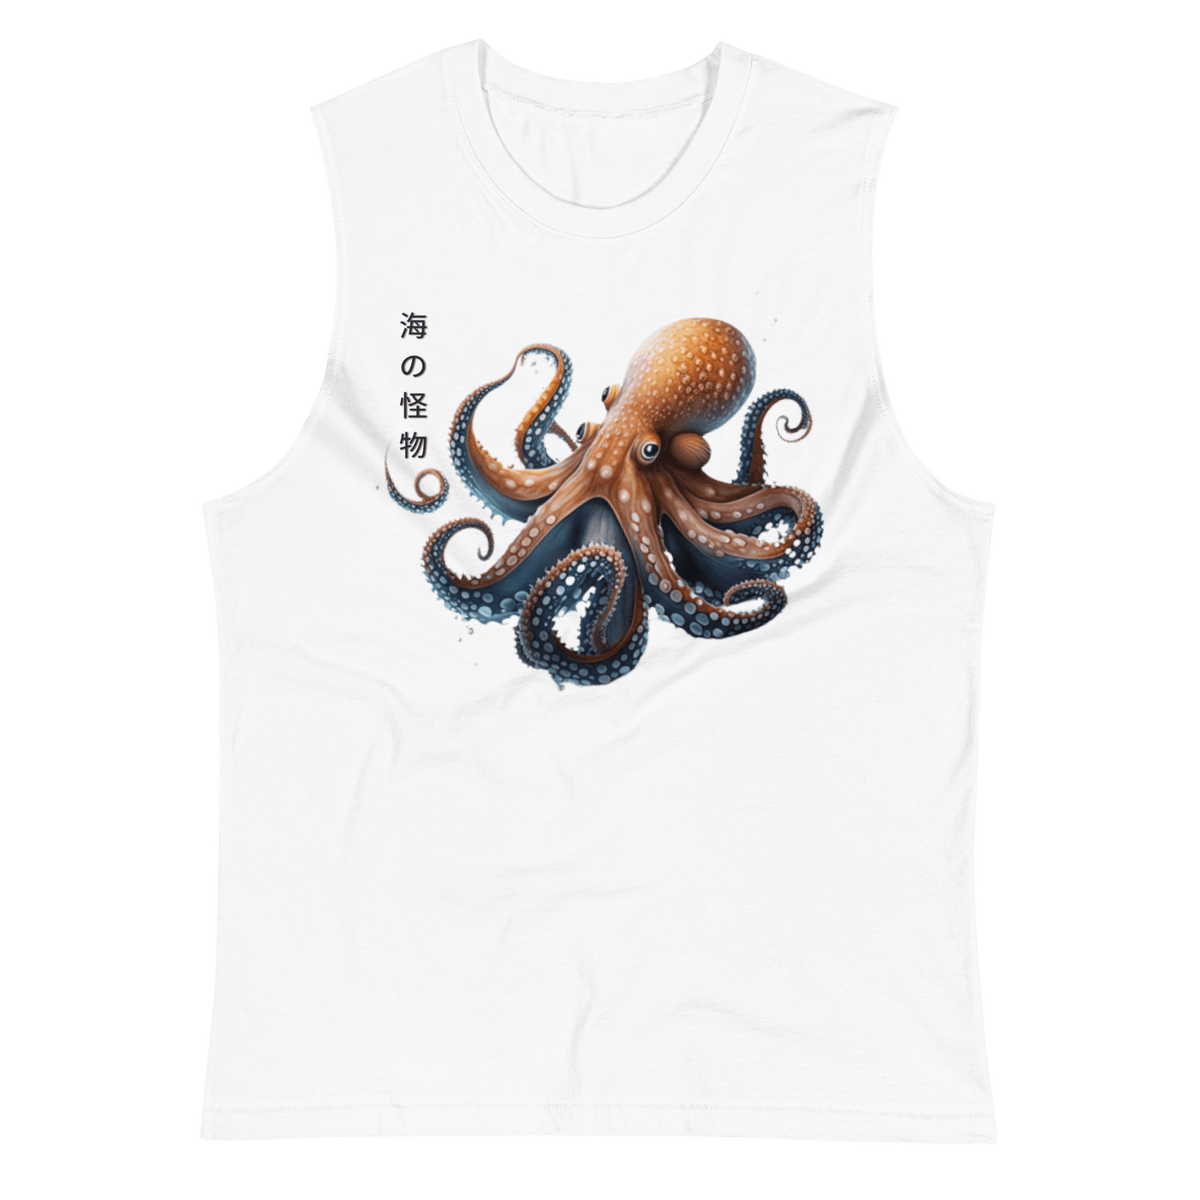 Japanese Octopus Muscle Shirt, Japanese Octopus, Tokio Japan, Gift for him, Gift for dad, Tee, Tank Top, Shirt, kawaii, Japanese Graphic Tee, Japanese Culture apparel, Japanese Tank Top, Japanese Calligraphy, Samurai Shirt